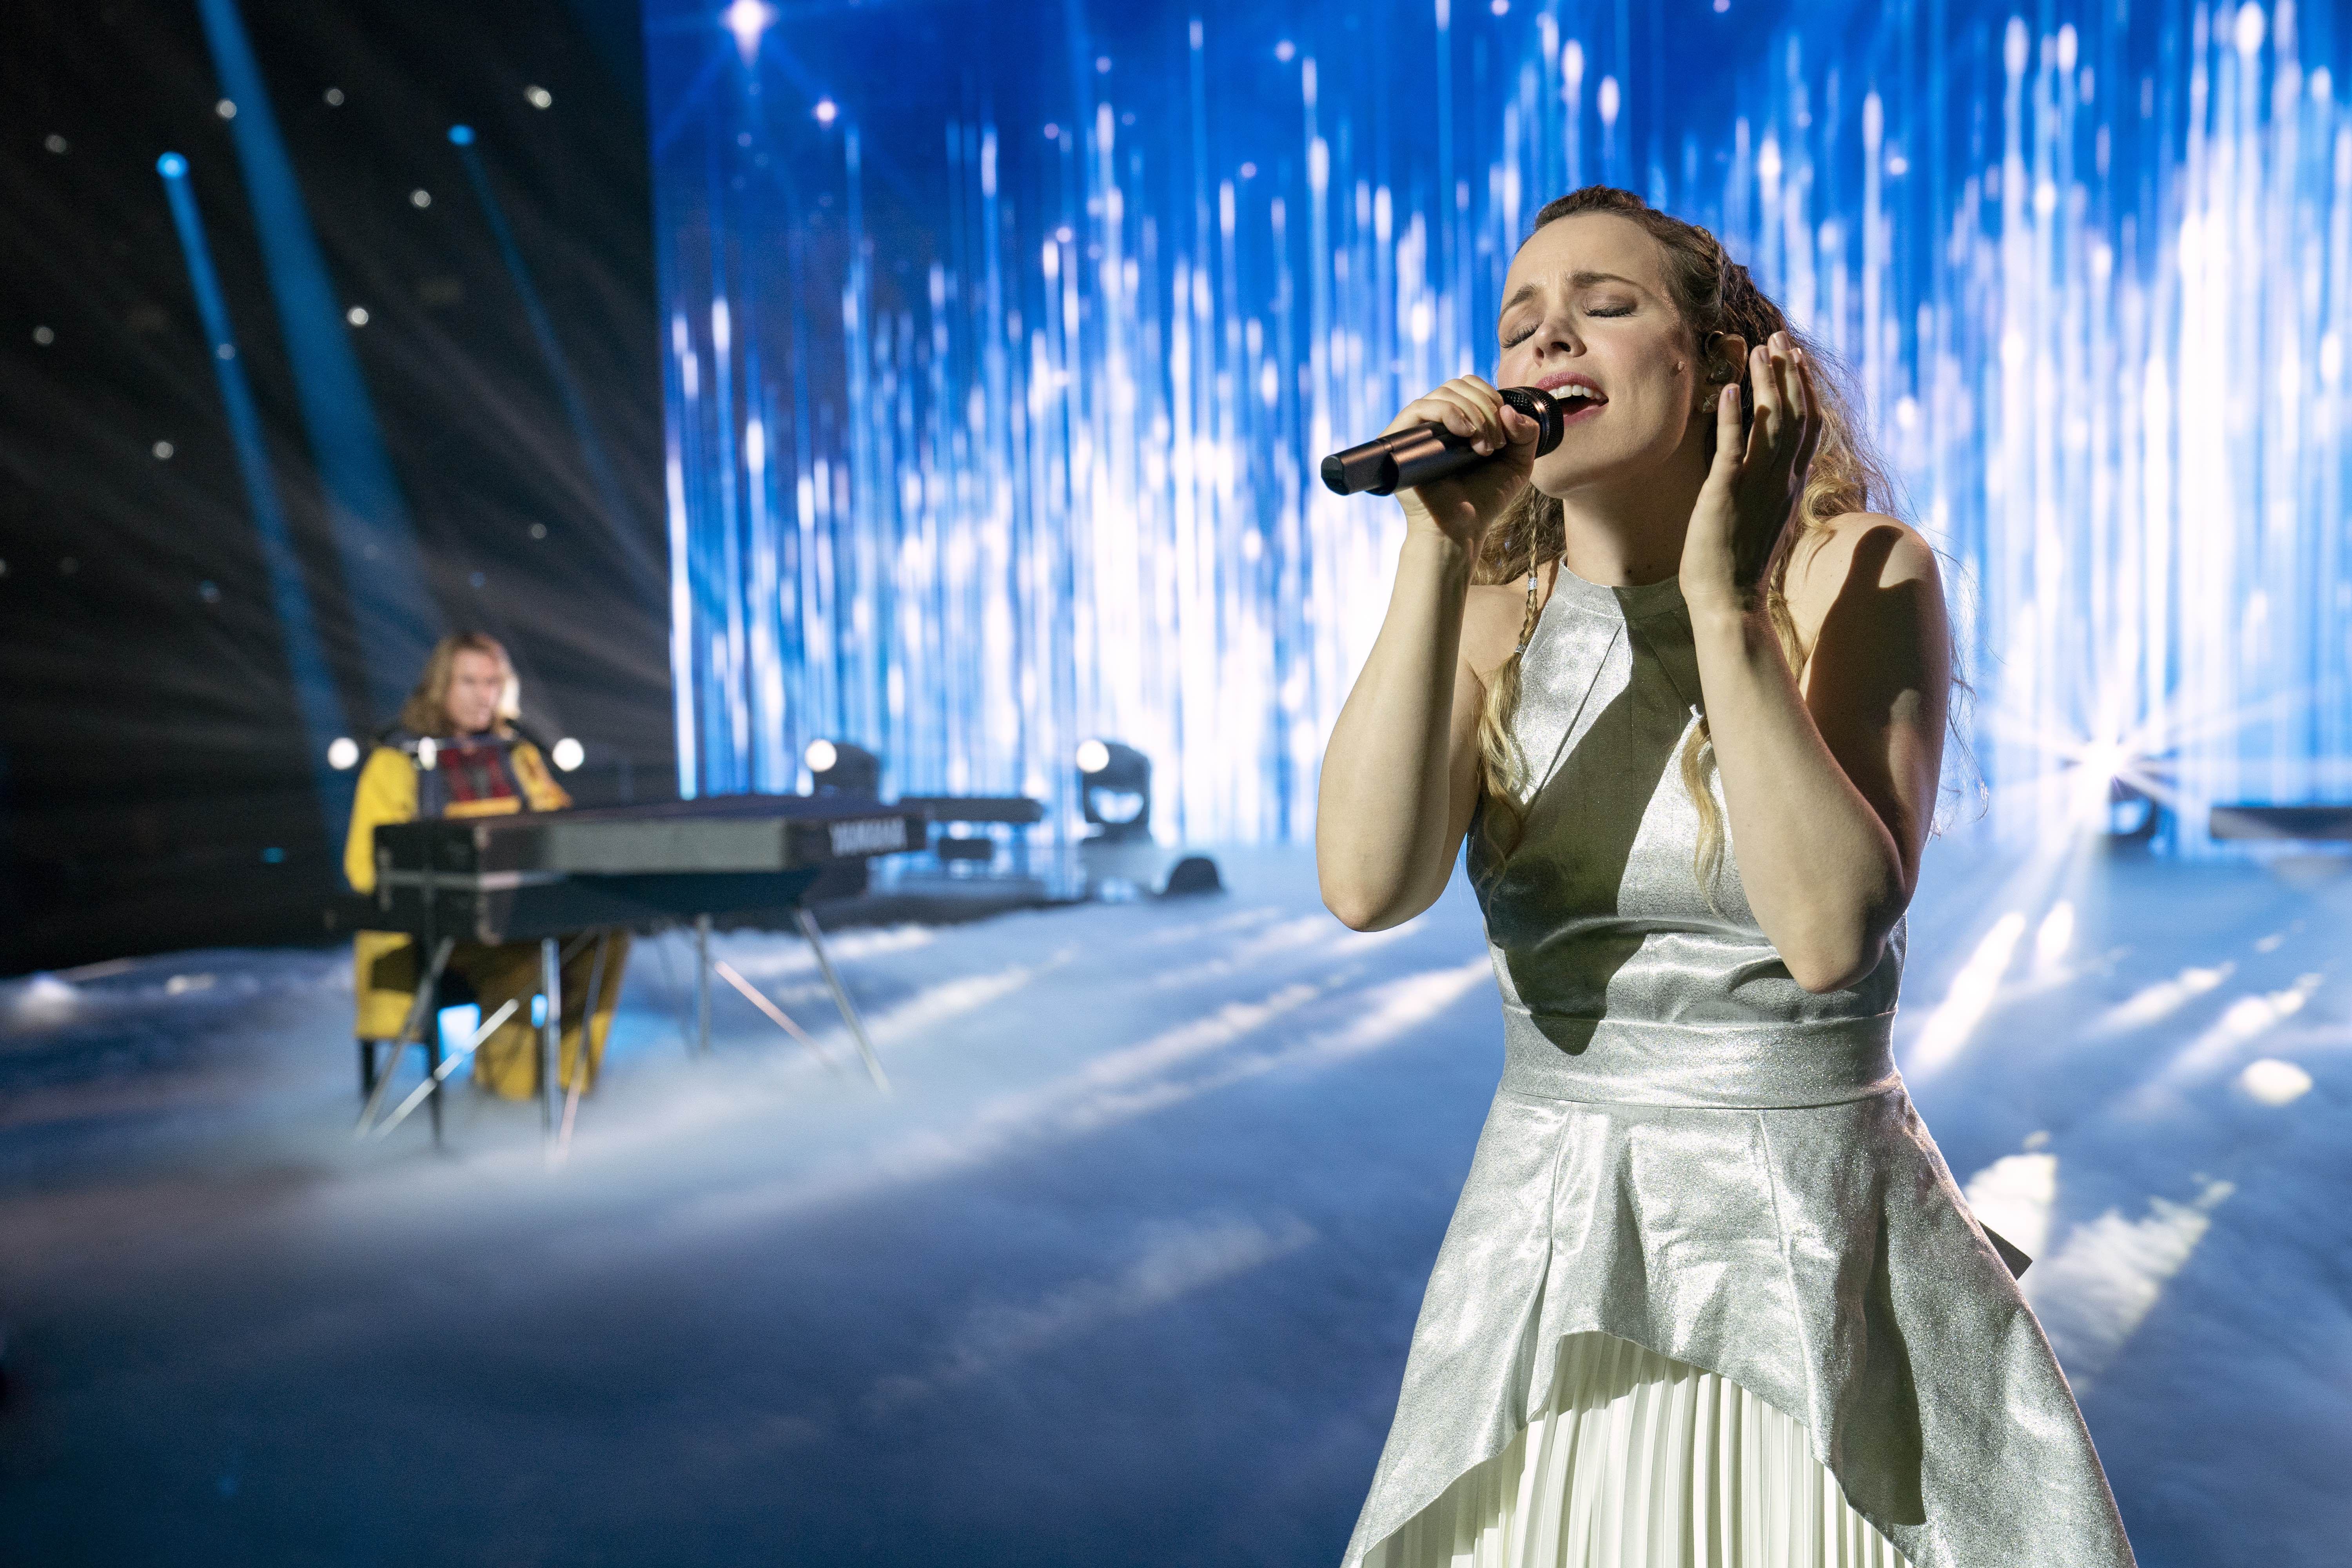 Does Rachel Mcadams Sing In The Eurovision Movie